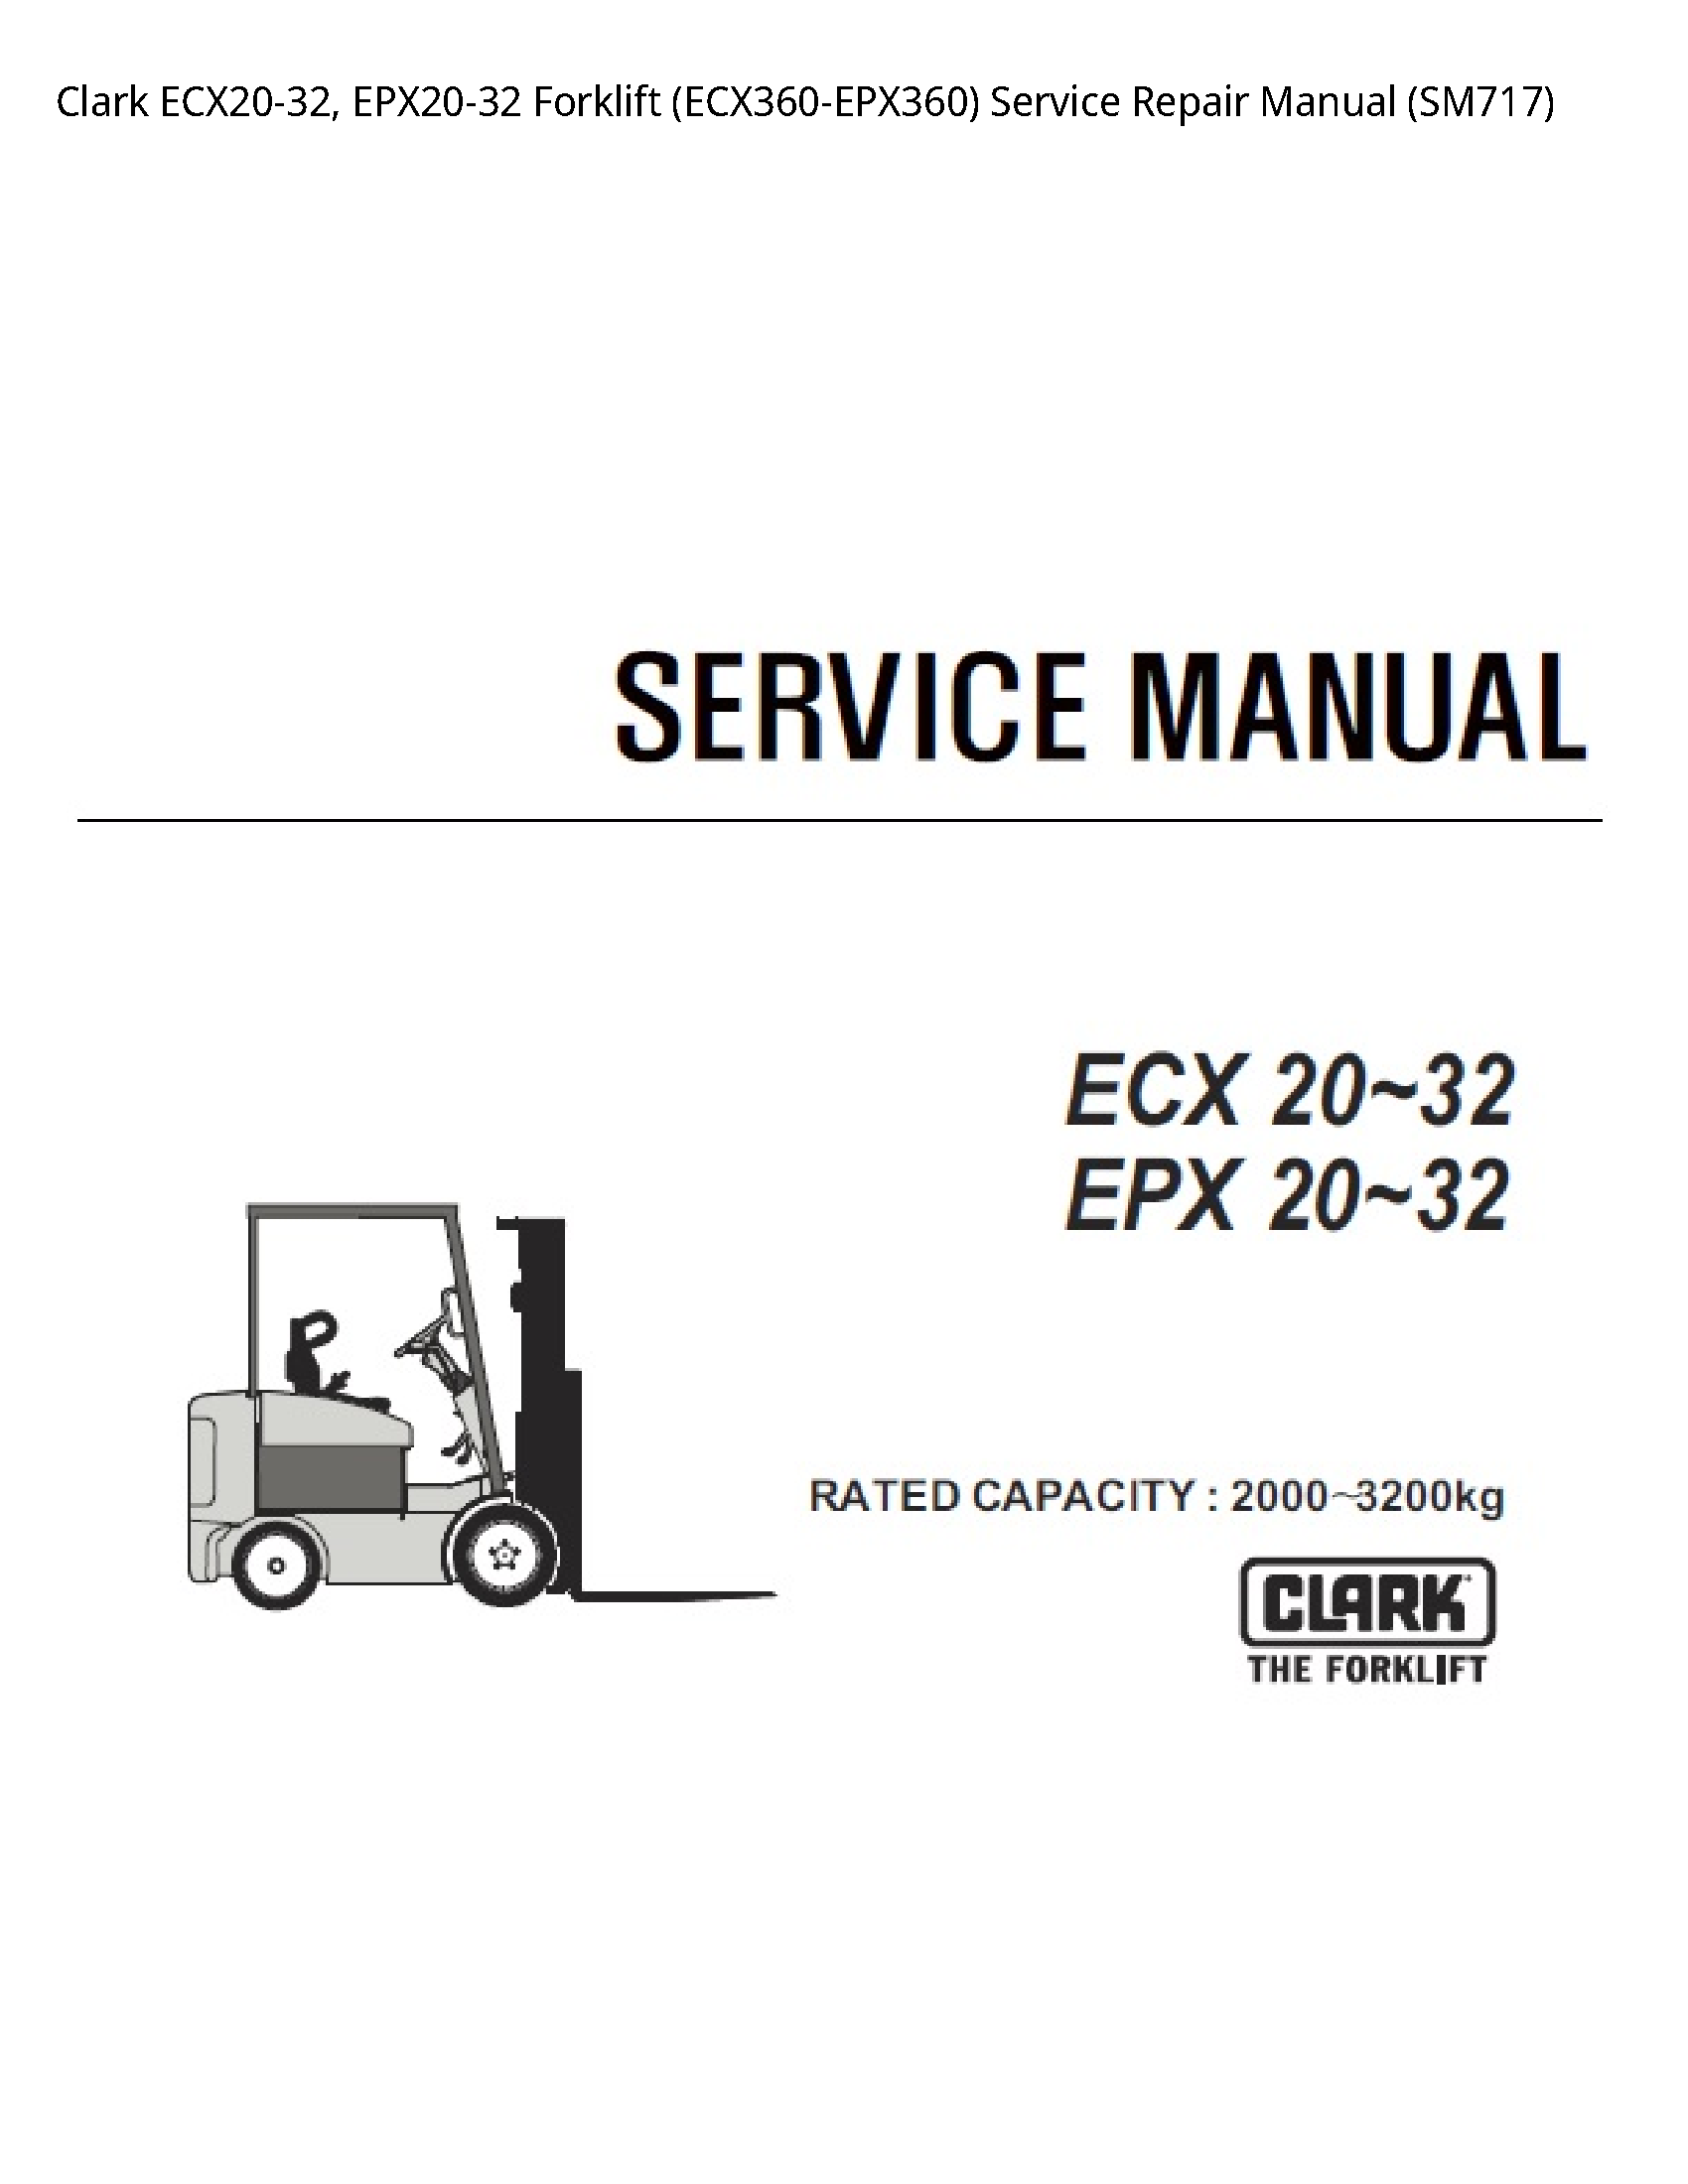 Clark ECX20-32 Forklift manual